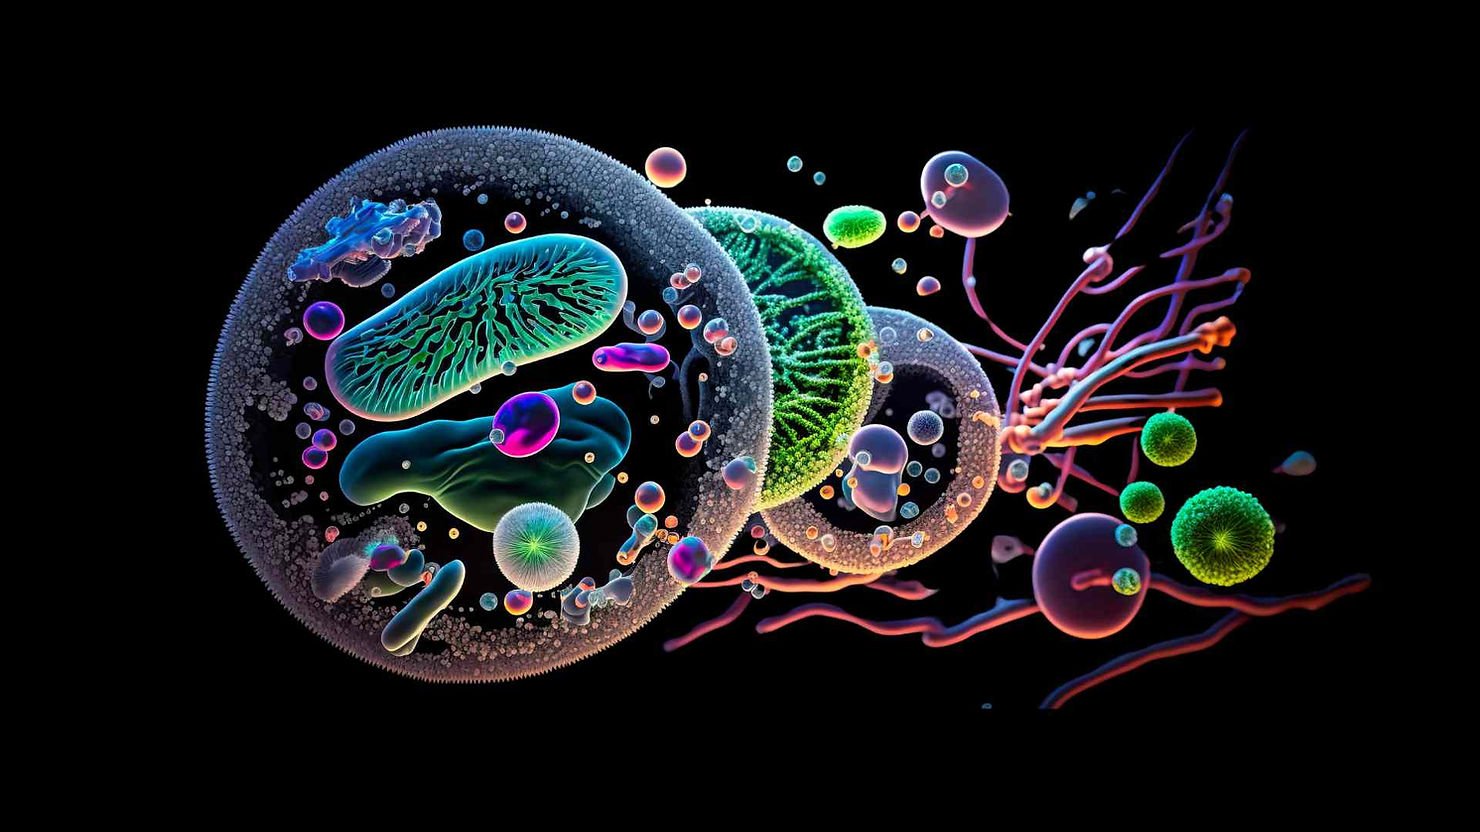 Bacteria-Based Art